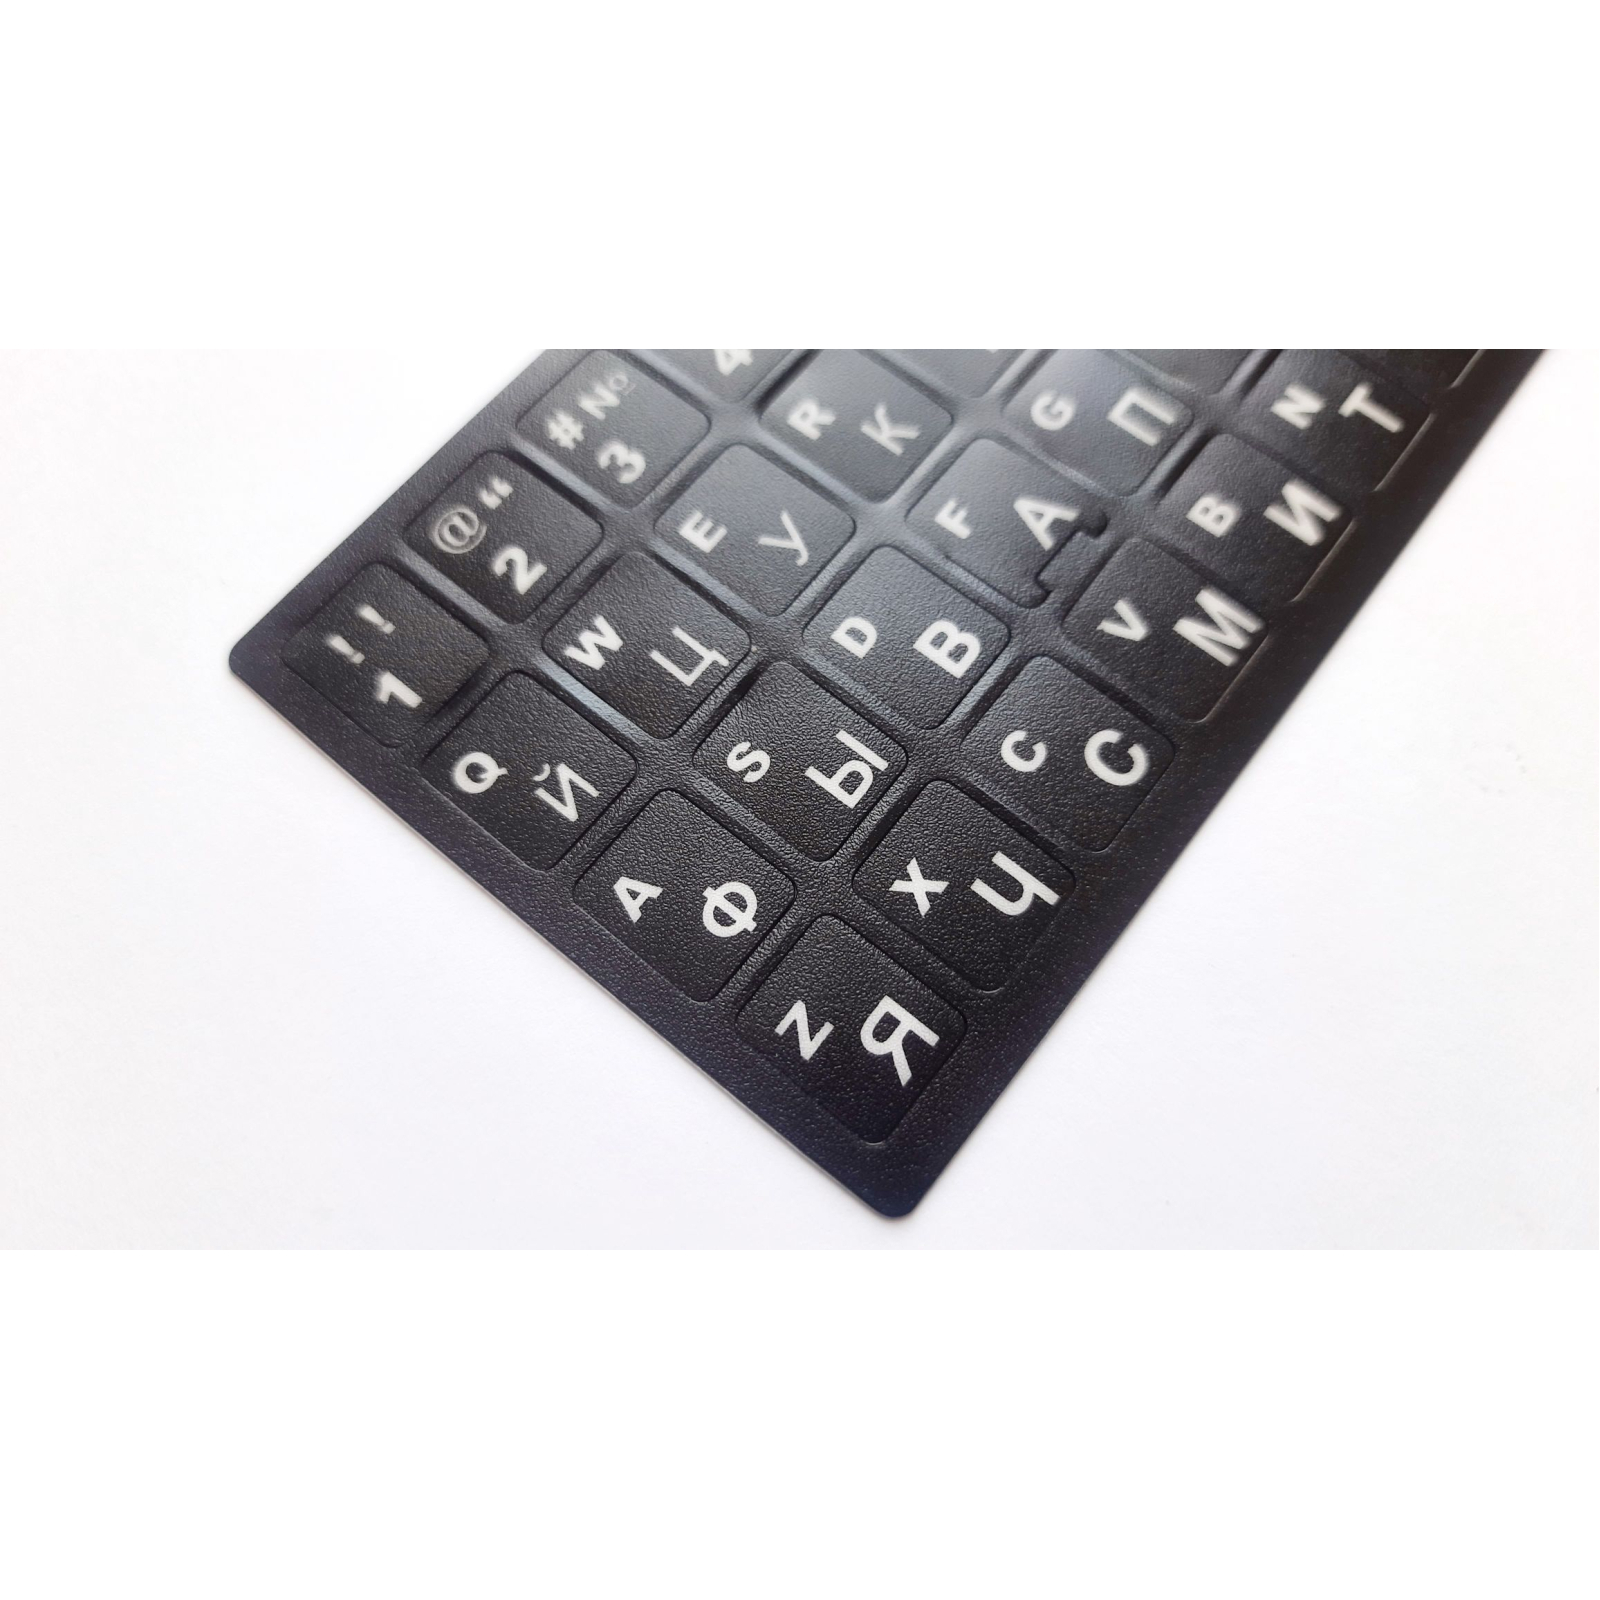 Наклейка на клавіатуру AlSoft непрозора EN/RU (11x13мм) чорна (кирилиця біла) textured (A43980) зображення 2